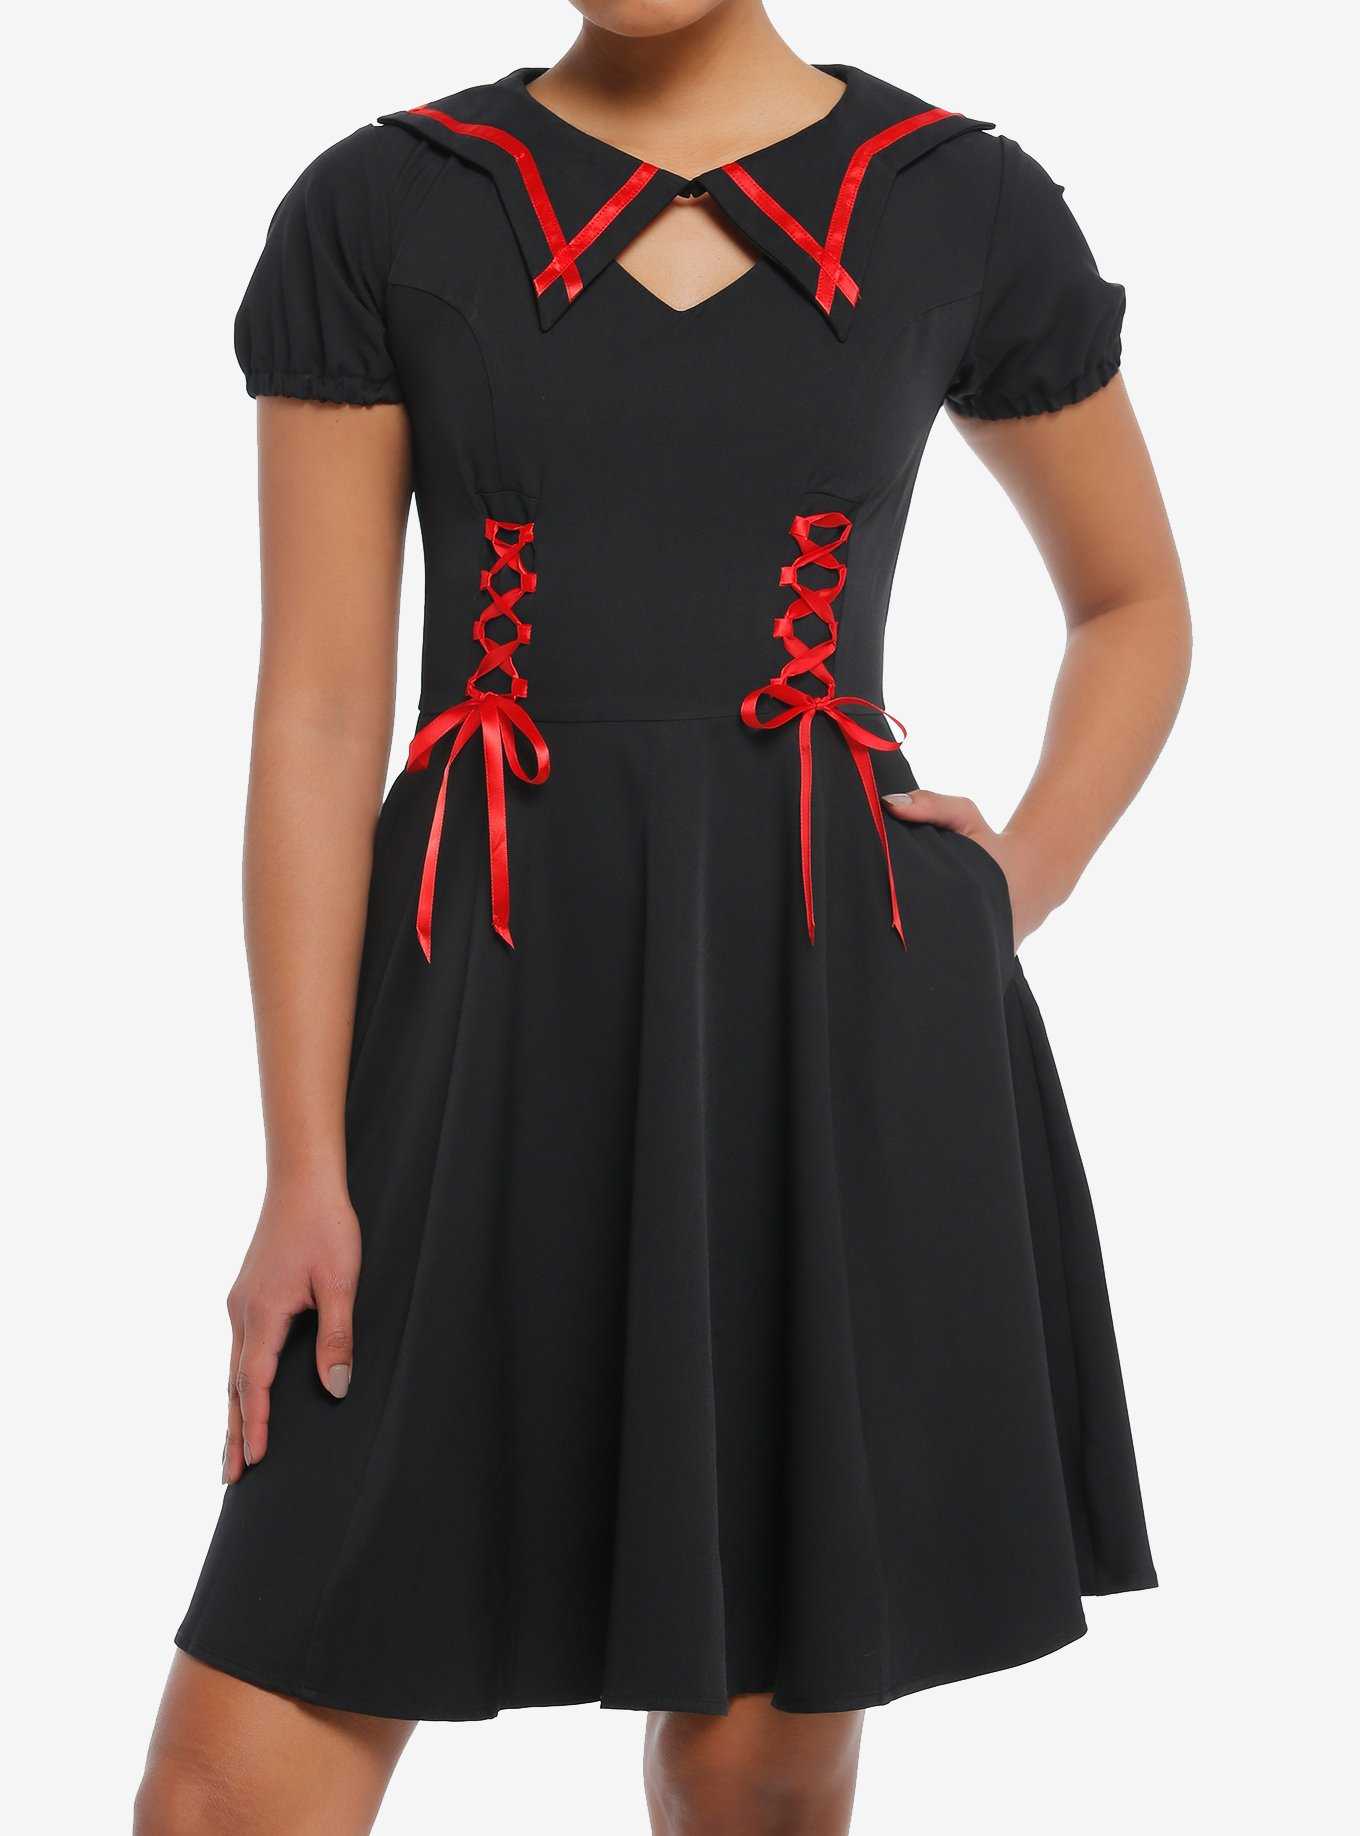 Black & Red Lace-Up Ribbon Skater Dress, , hi-res